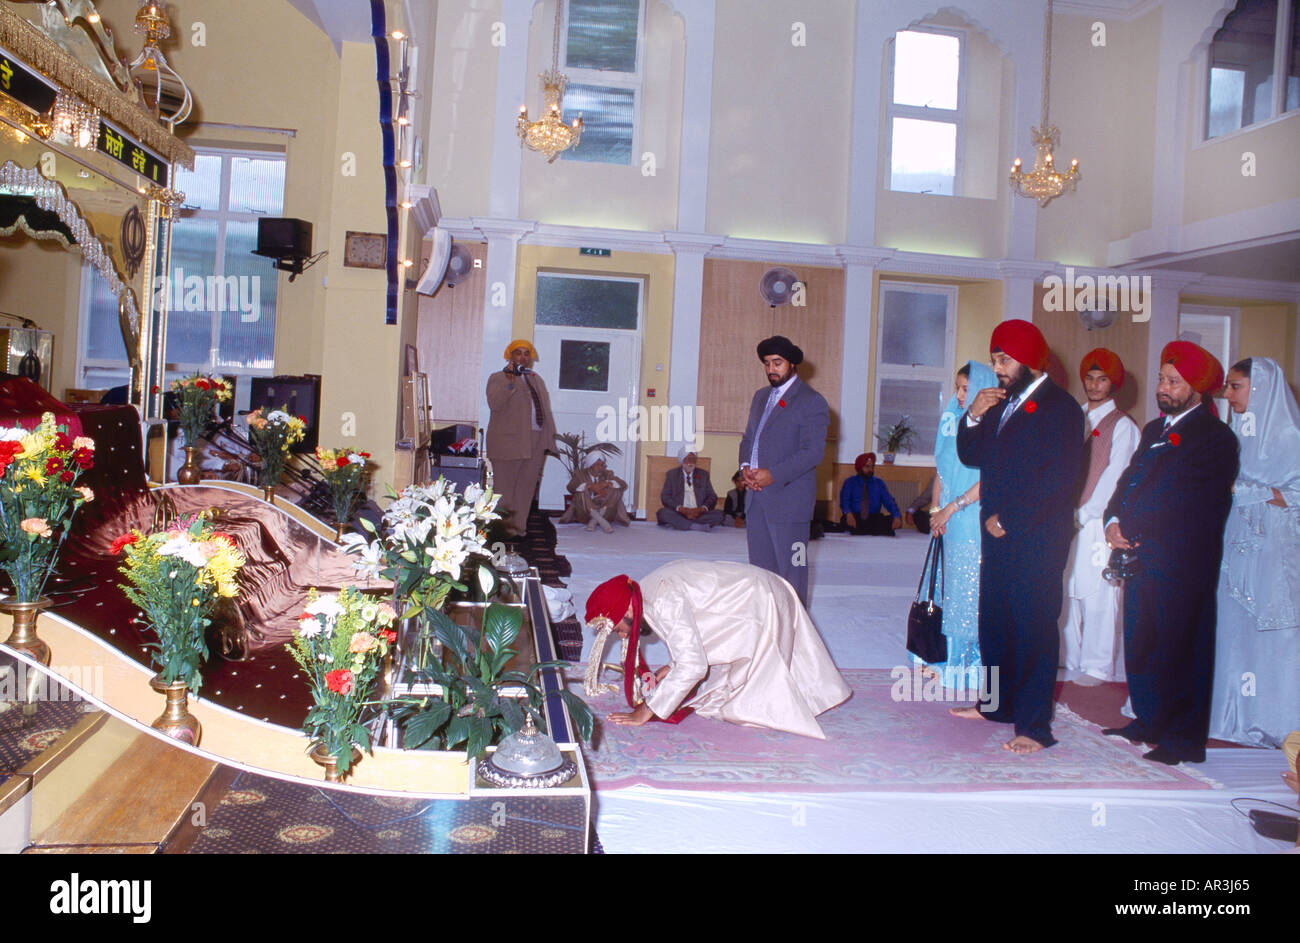 La religione sikh Wedding - lo sposo in arrivo & Inchinandosi prima Granth Gurdwara centrale Shepherds Bush London Inghilterra England Foto Stock